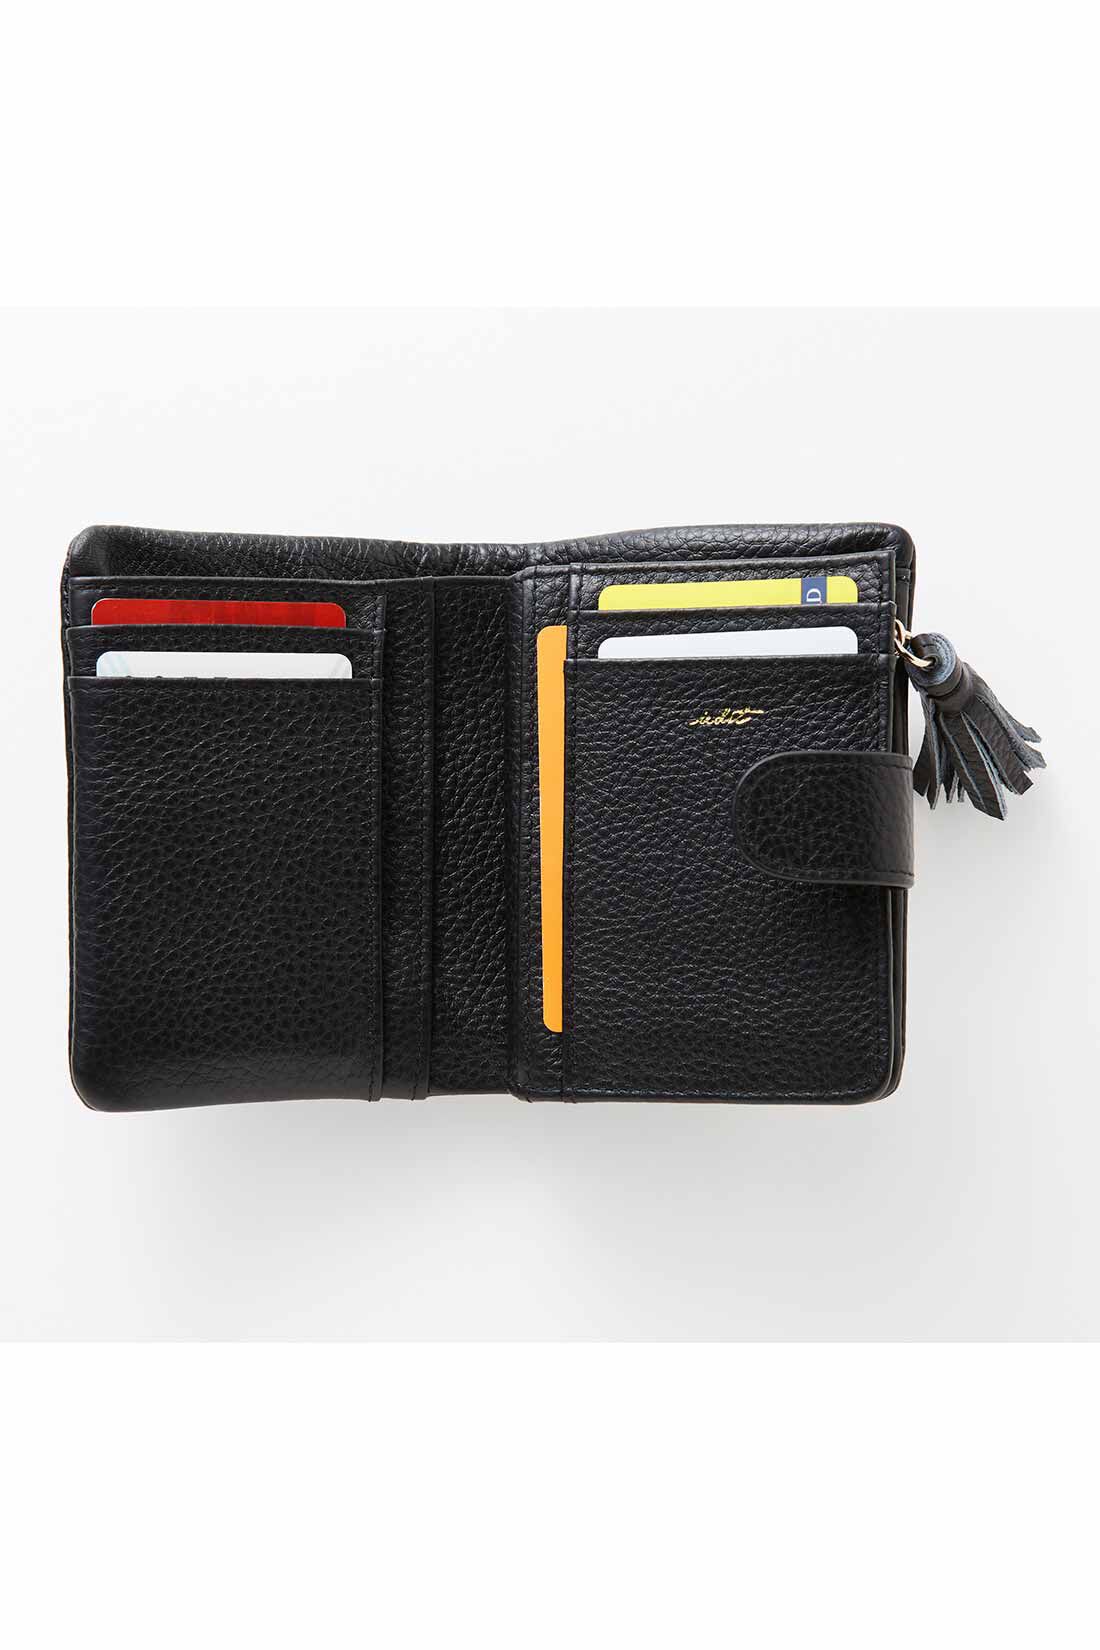 IEDIT[イディット]　くったり本革素材できれいめ二つ折り財布〈ブラック〉|カードはたっぷり8枚収納可。